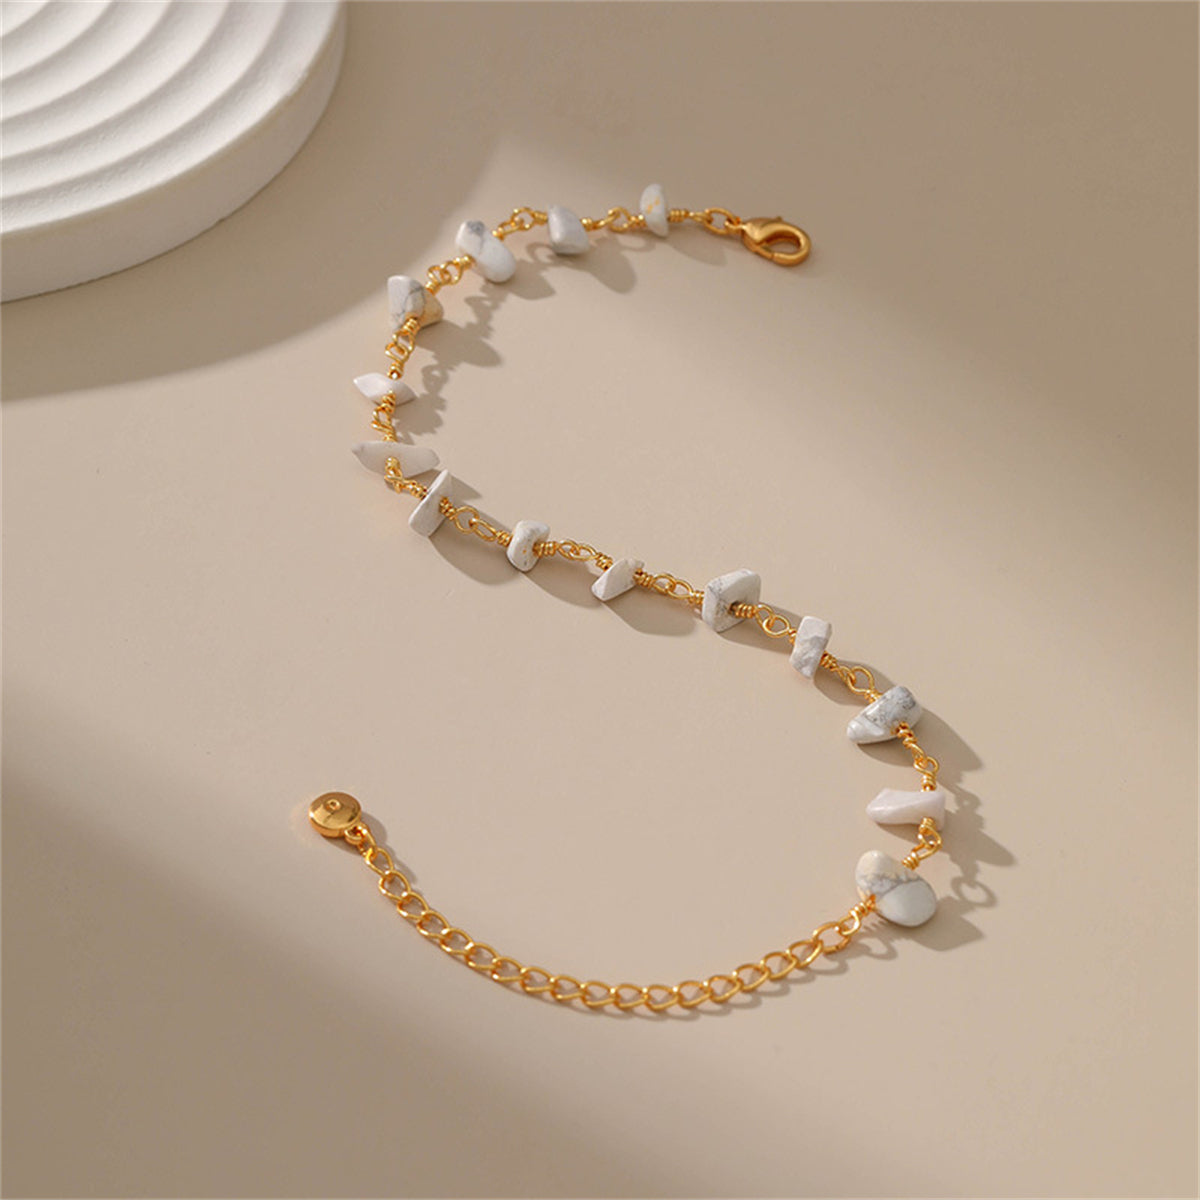 White Turquoise & 18K Gold-Plated Bracelet